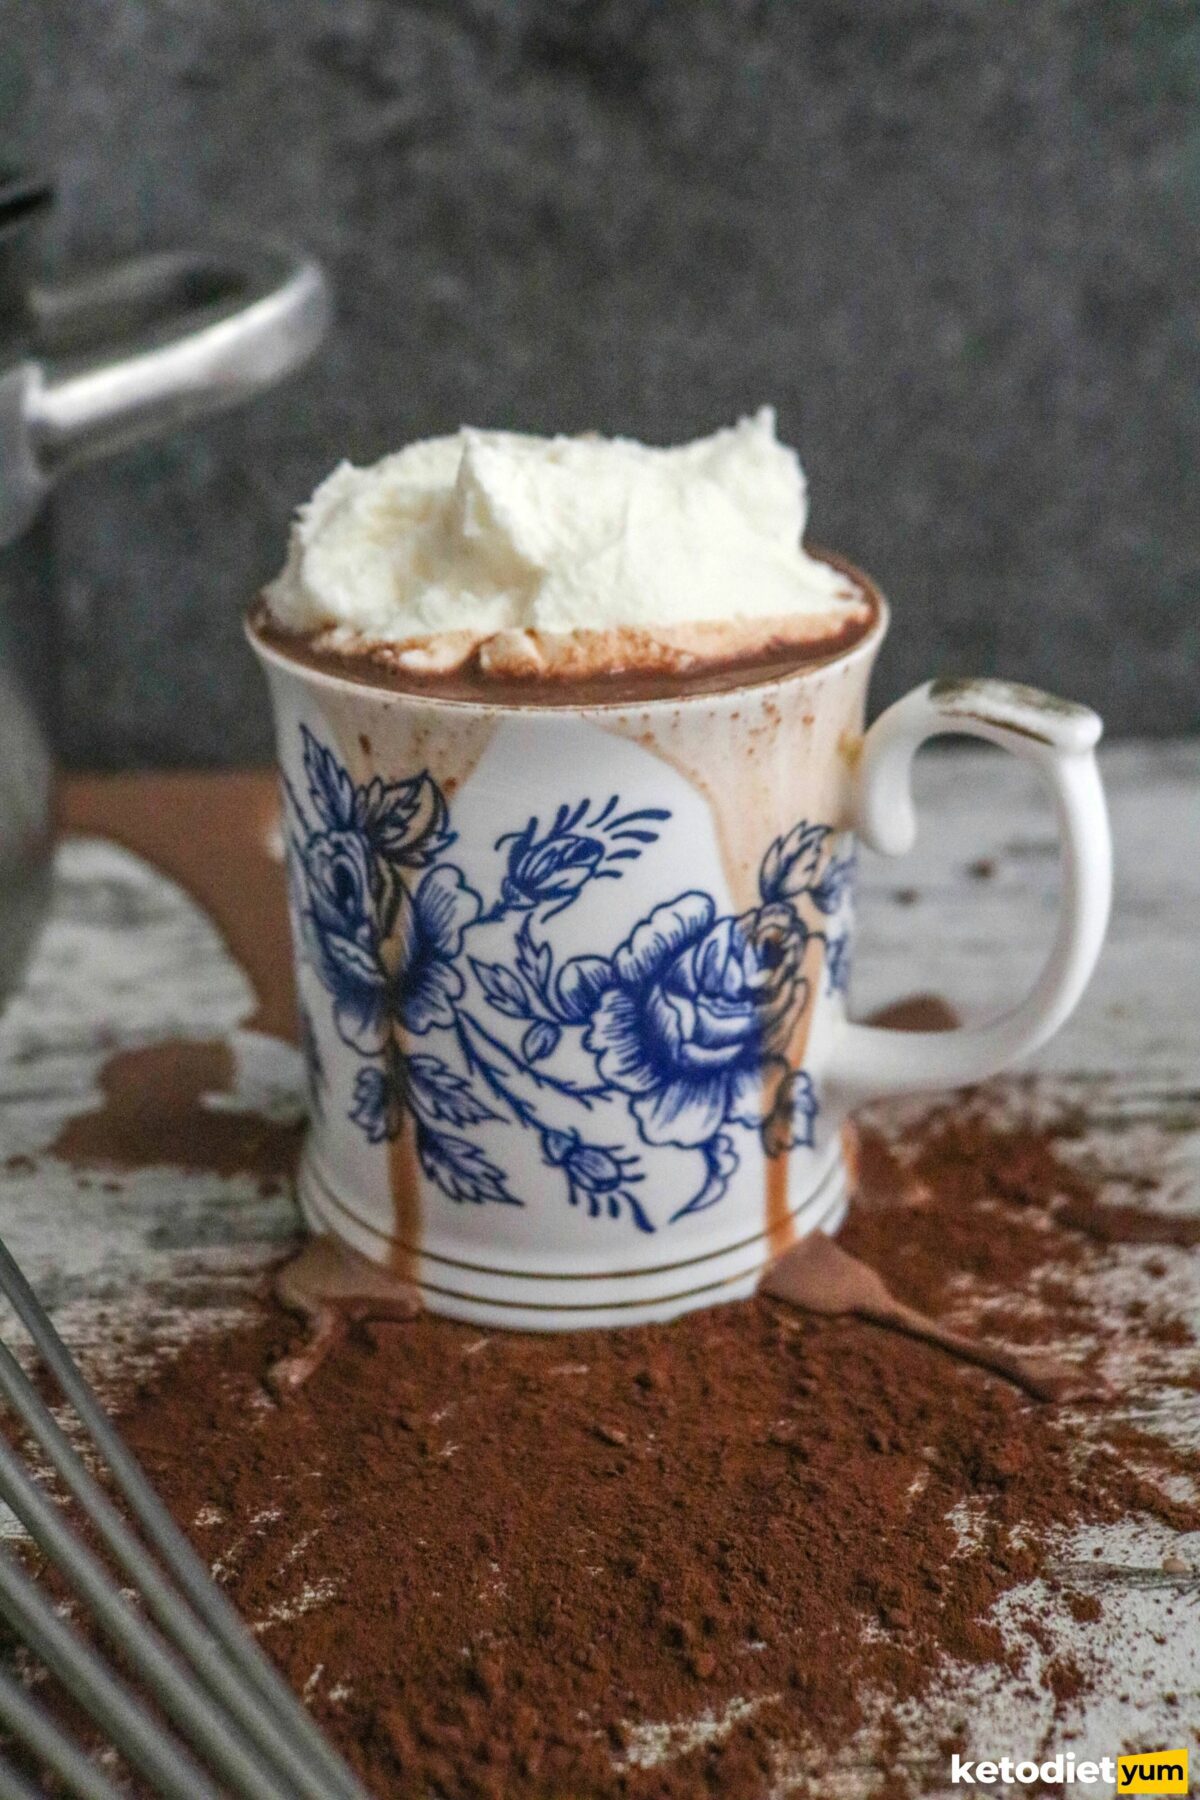 5-Minute Keto Hot Chocolate